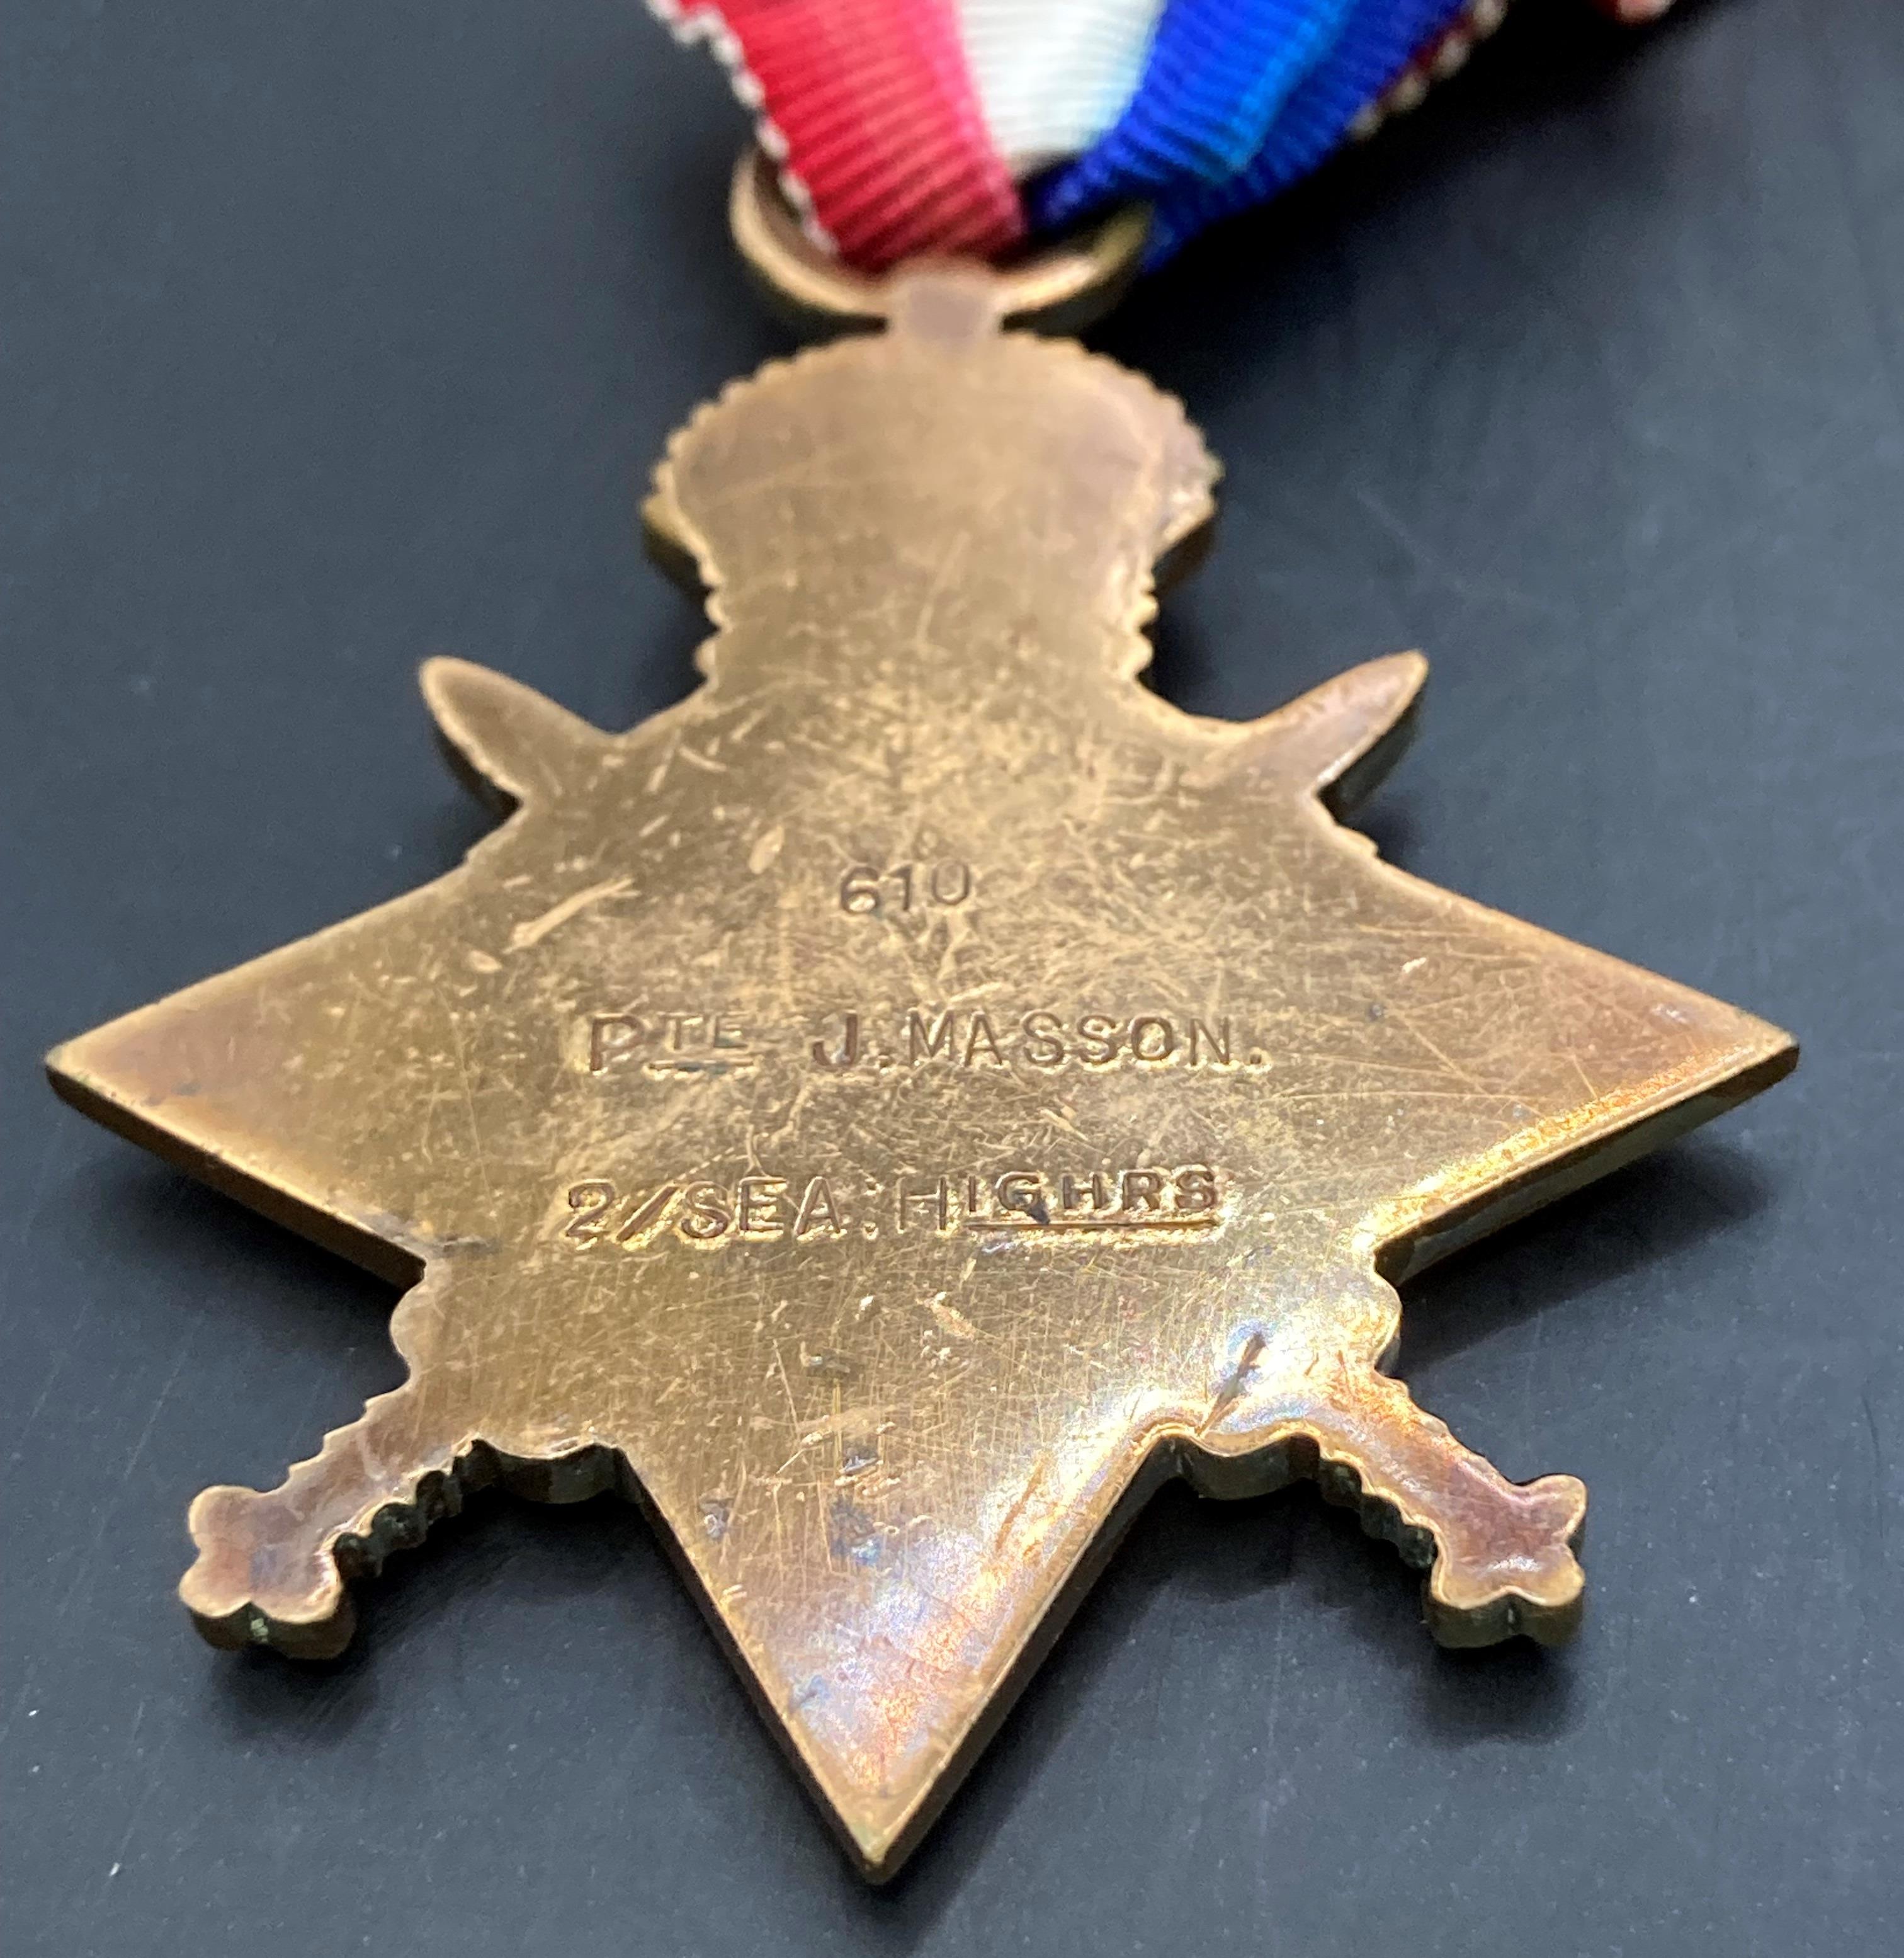 Three First World War medals - 1914 Star, - Image 2 of 4